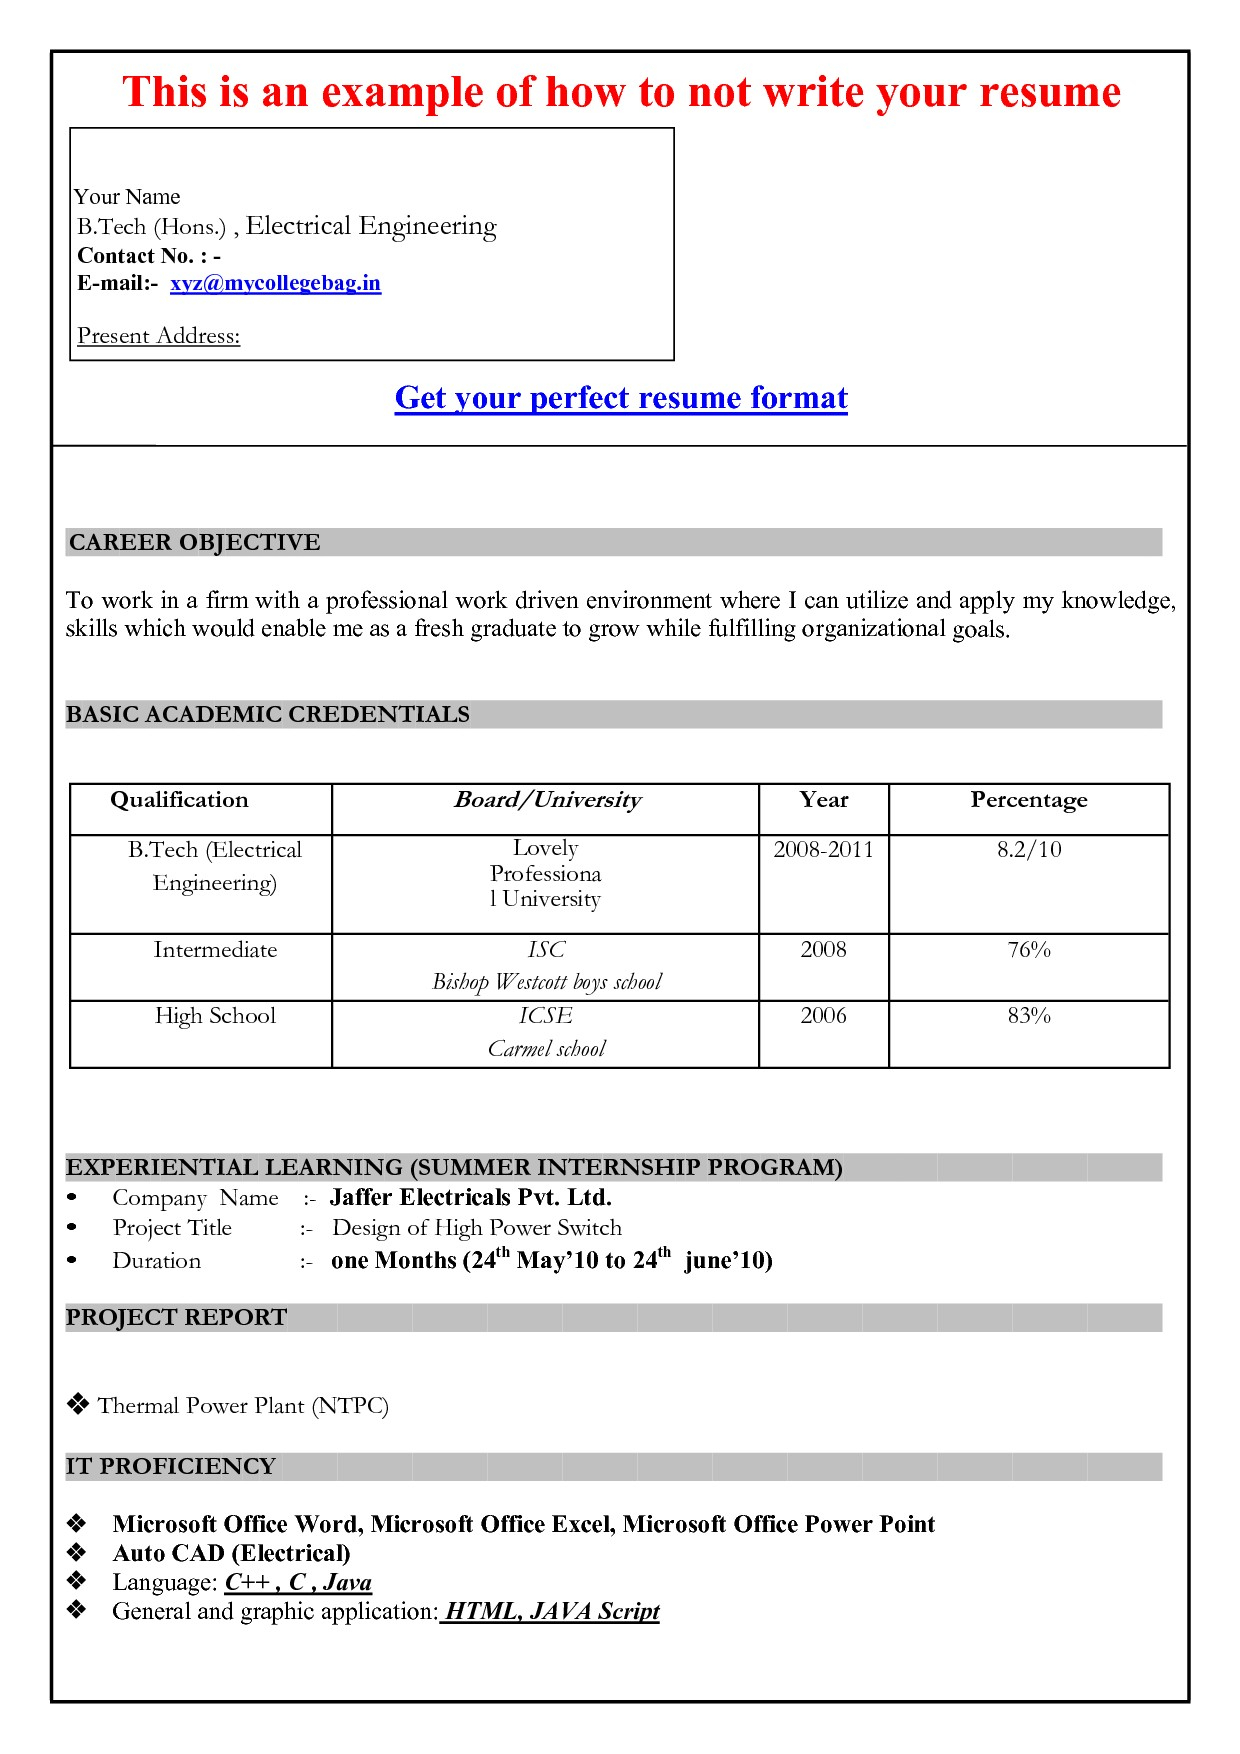 Resume Template Microsoft Word 2007 | Ckum.ca Pertaining To Resume Templates Word 2007